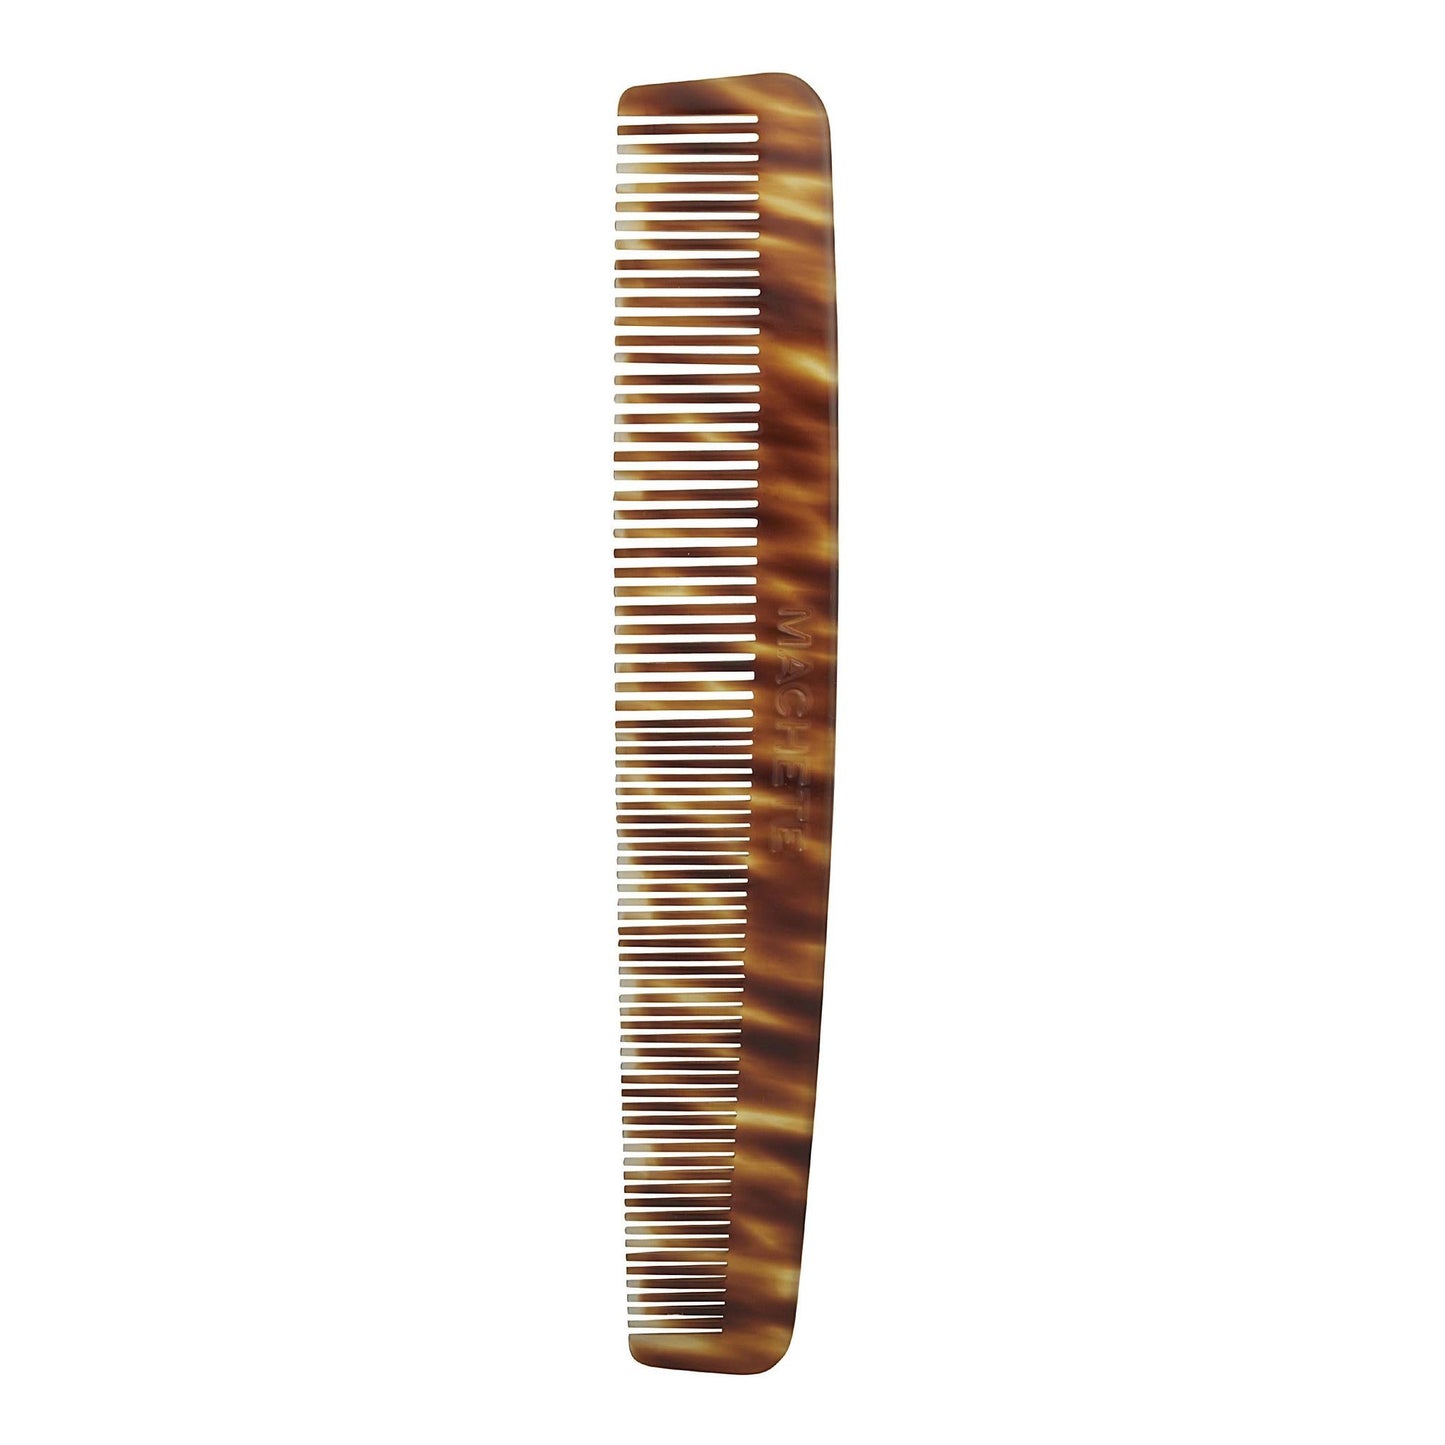 MACHETE No. 1 Comb in Walnut